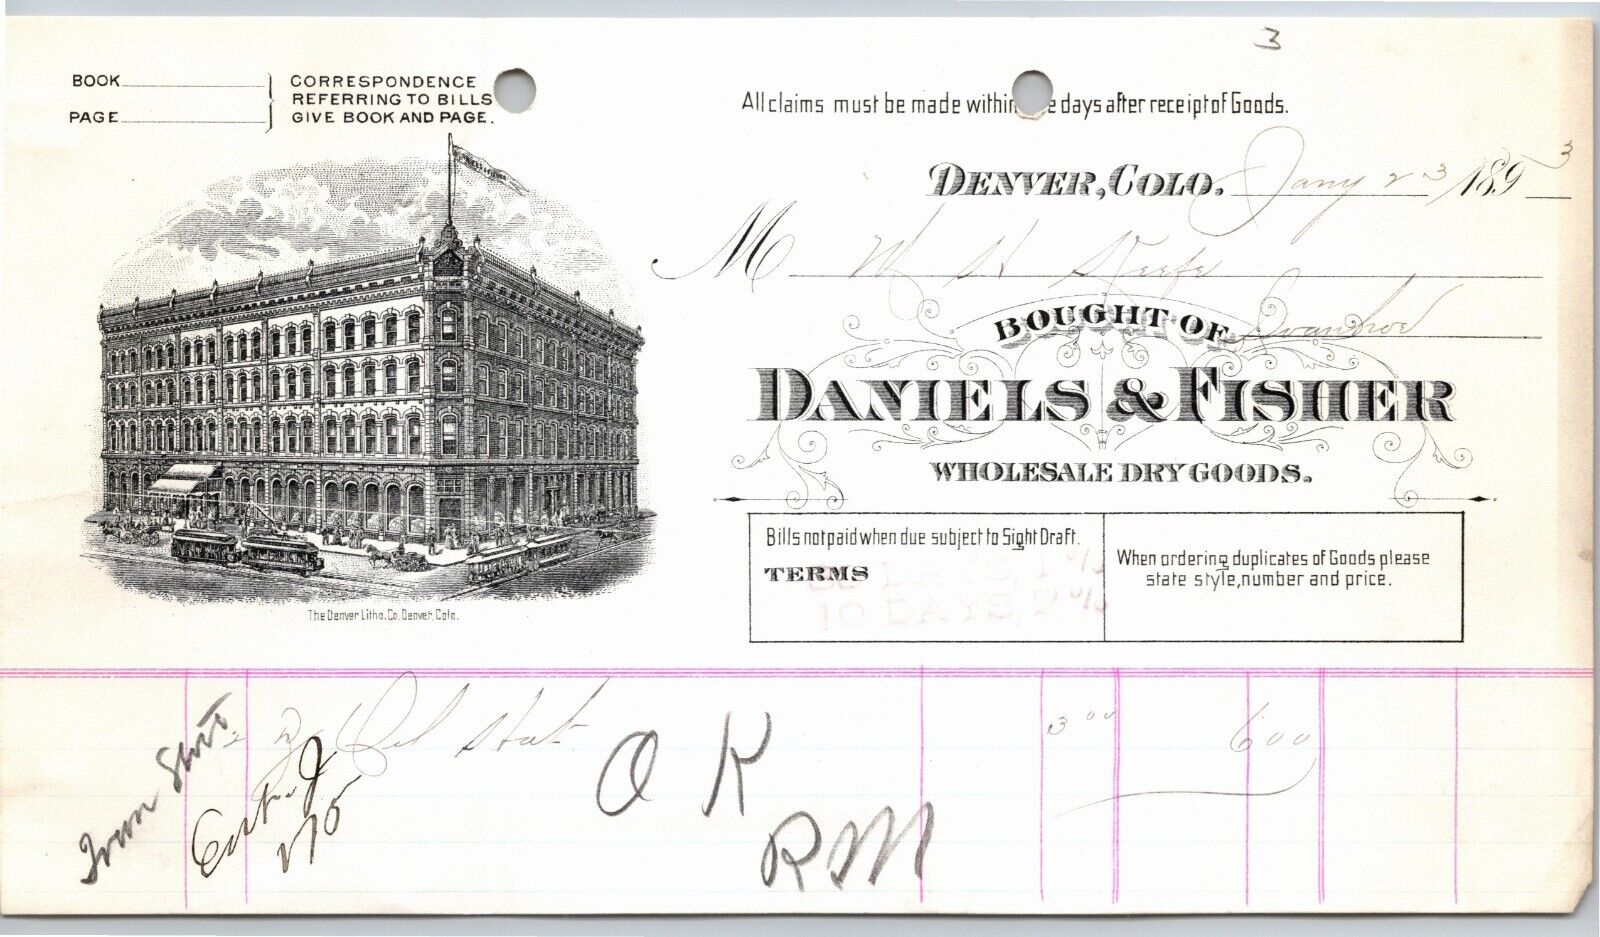 1893 Denver, CO Daniels & Fisher Wholesale Dry Goods Letterhead - M.H. Keefe